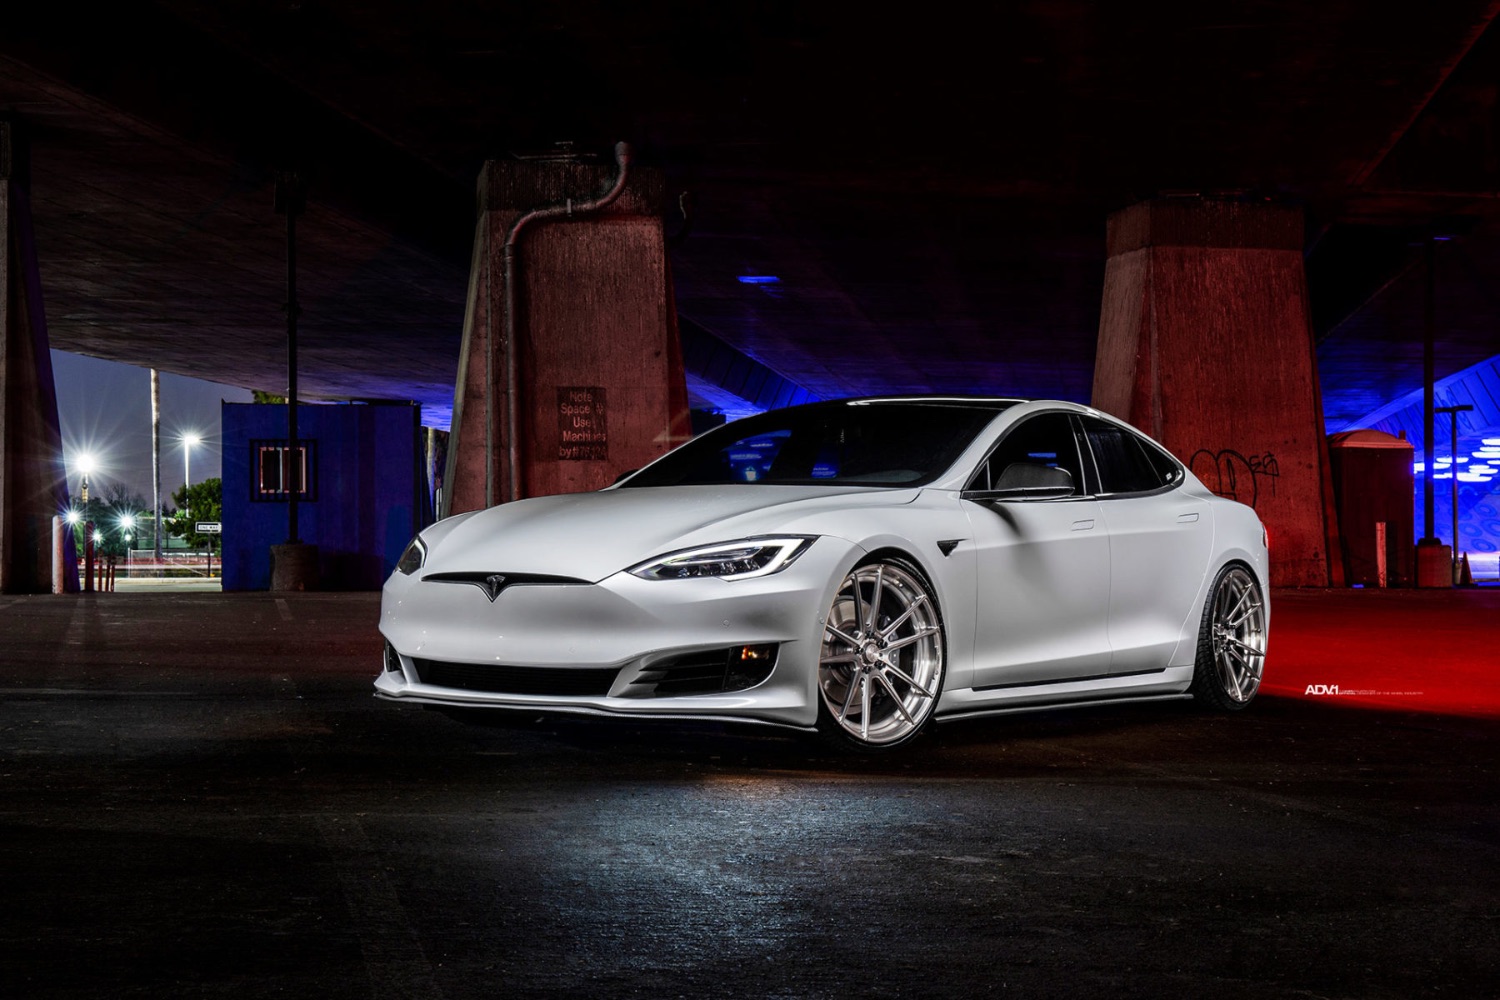 Tesla Model S ADV1 forged aftermarket wheels